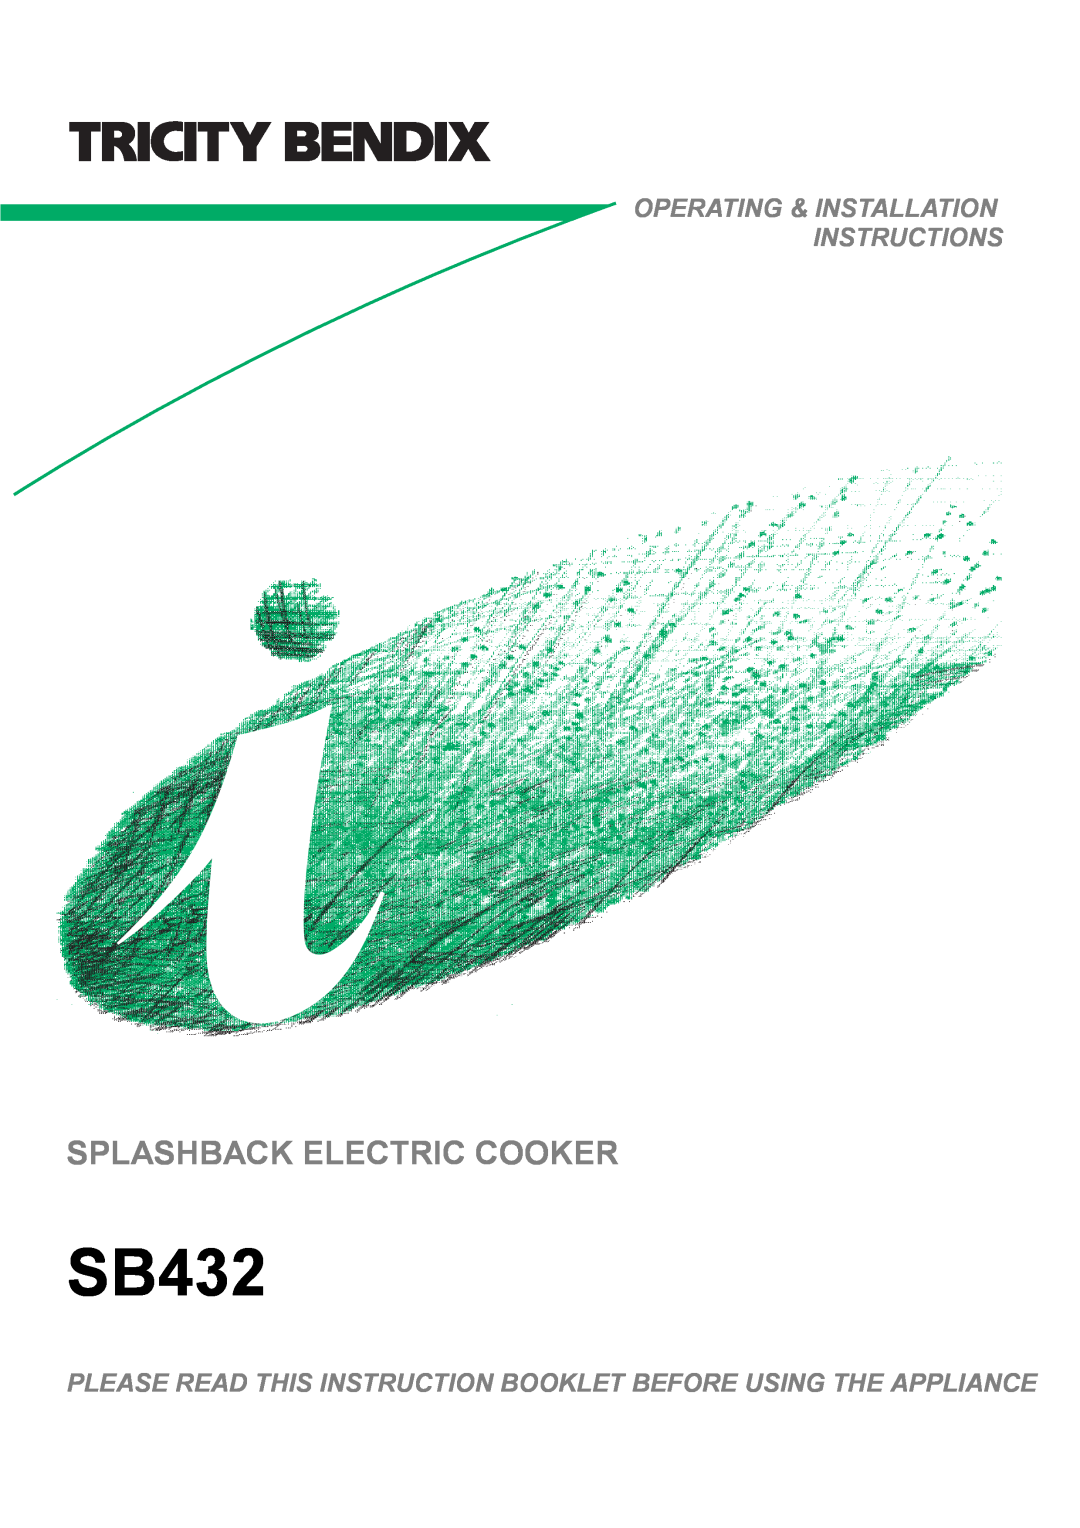 Tricity Bendix SB432 installation instructions Splashback Electric Cooker, Operating & Installation Instructions 